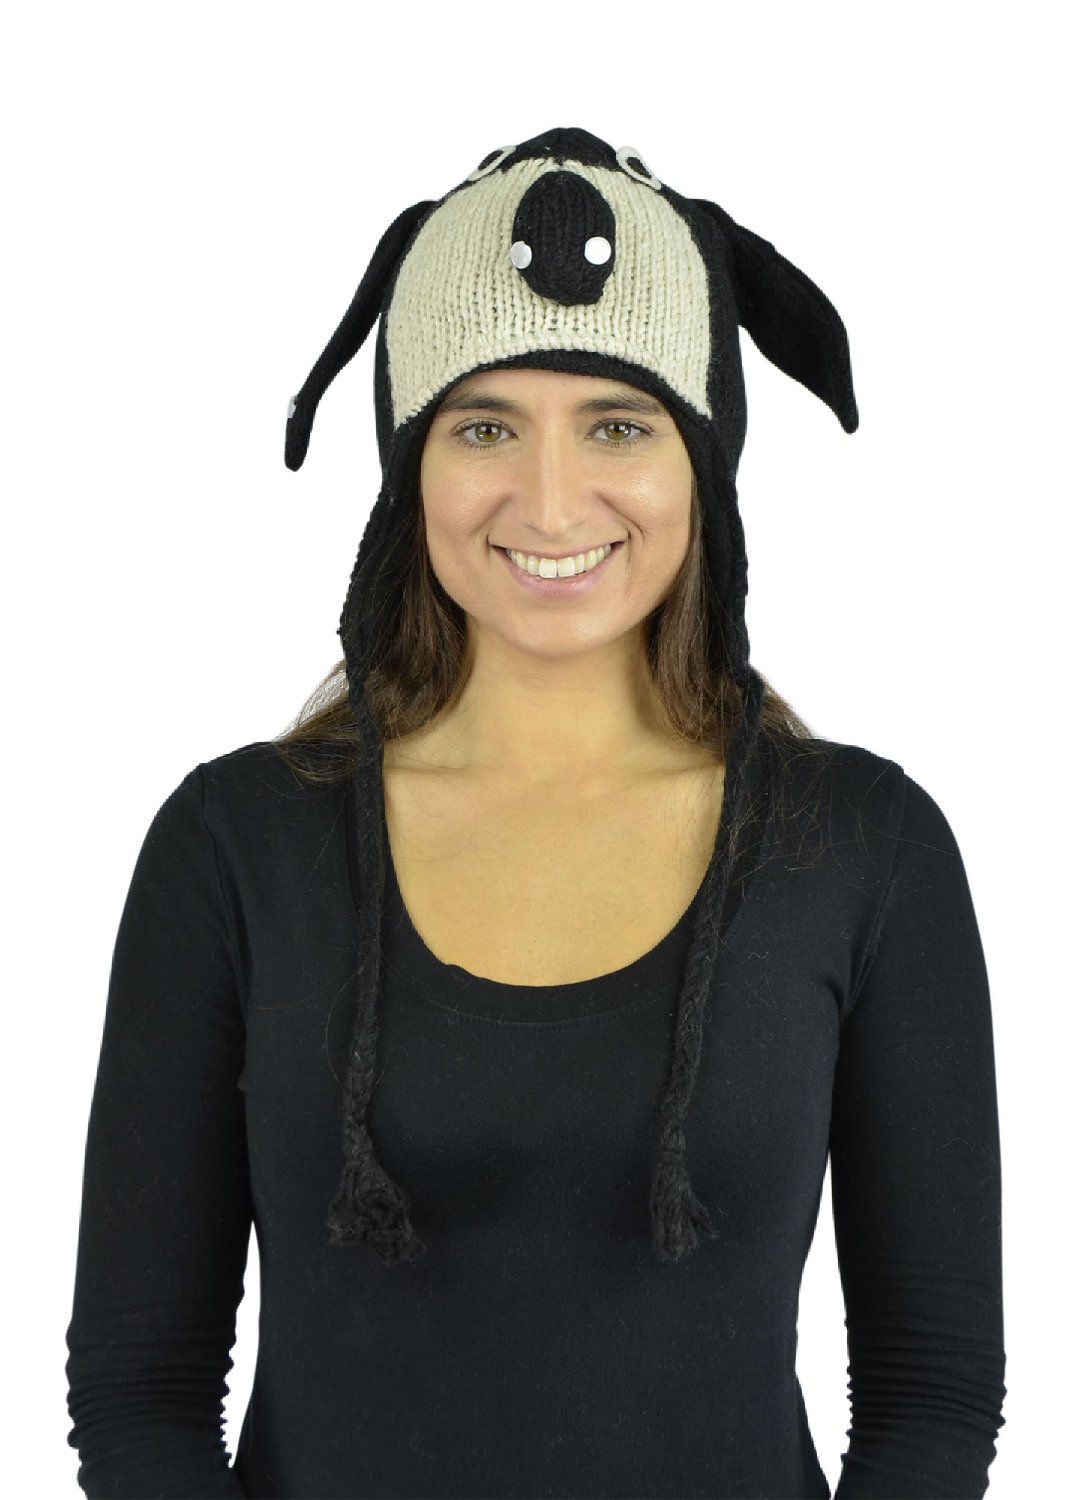 Belle Donne - Unisex Winter Knit Beagle Animal Hats with Pom Pom - Black